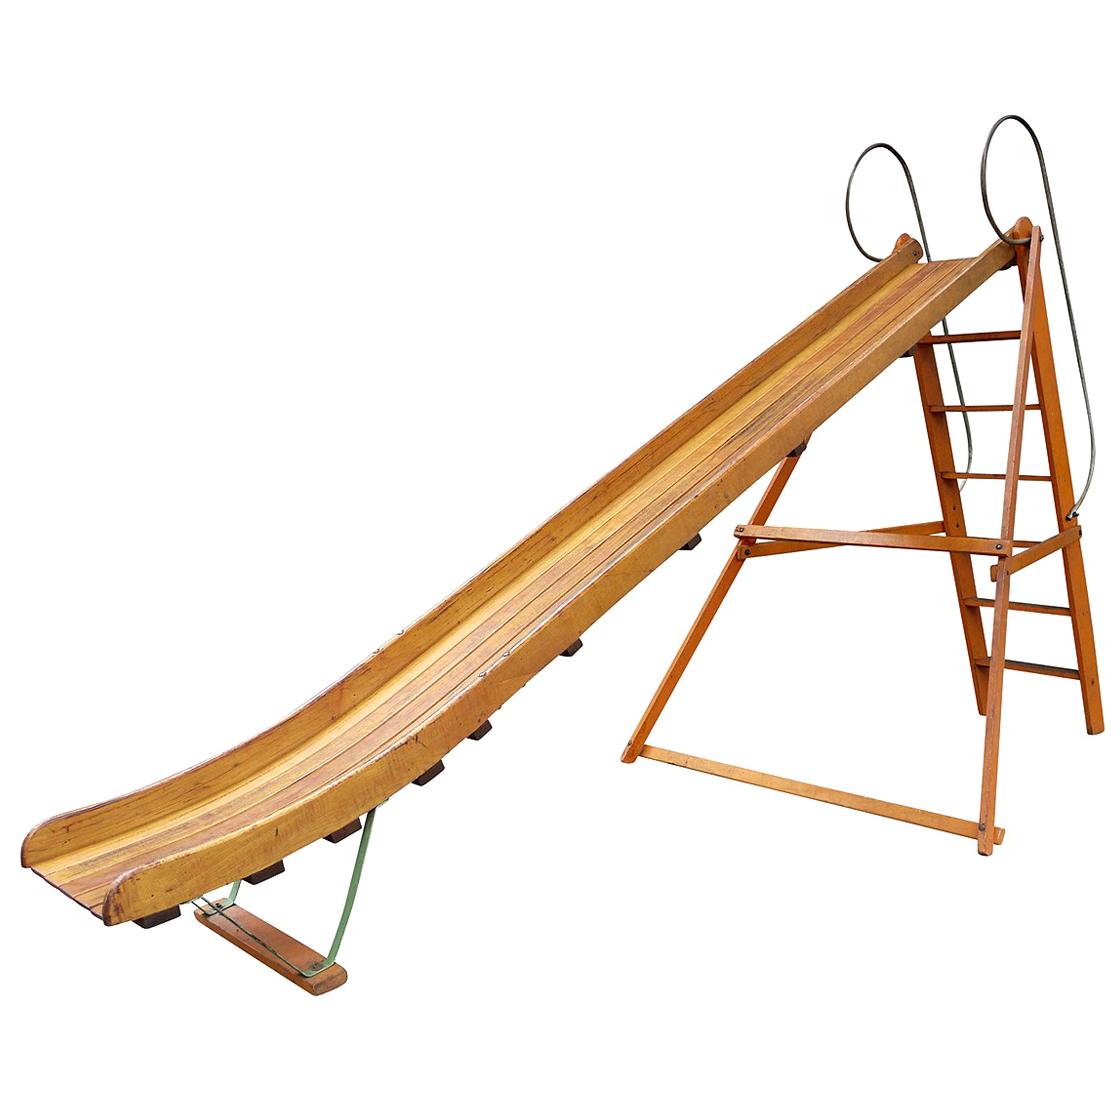 Vintage 1940s Bent Wood Playground Slide